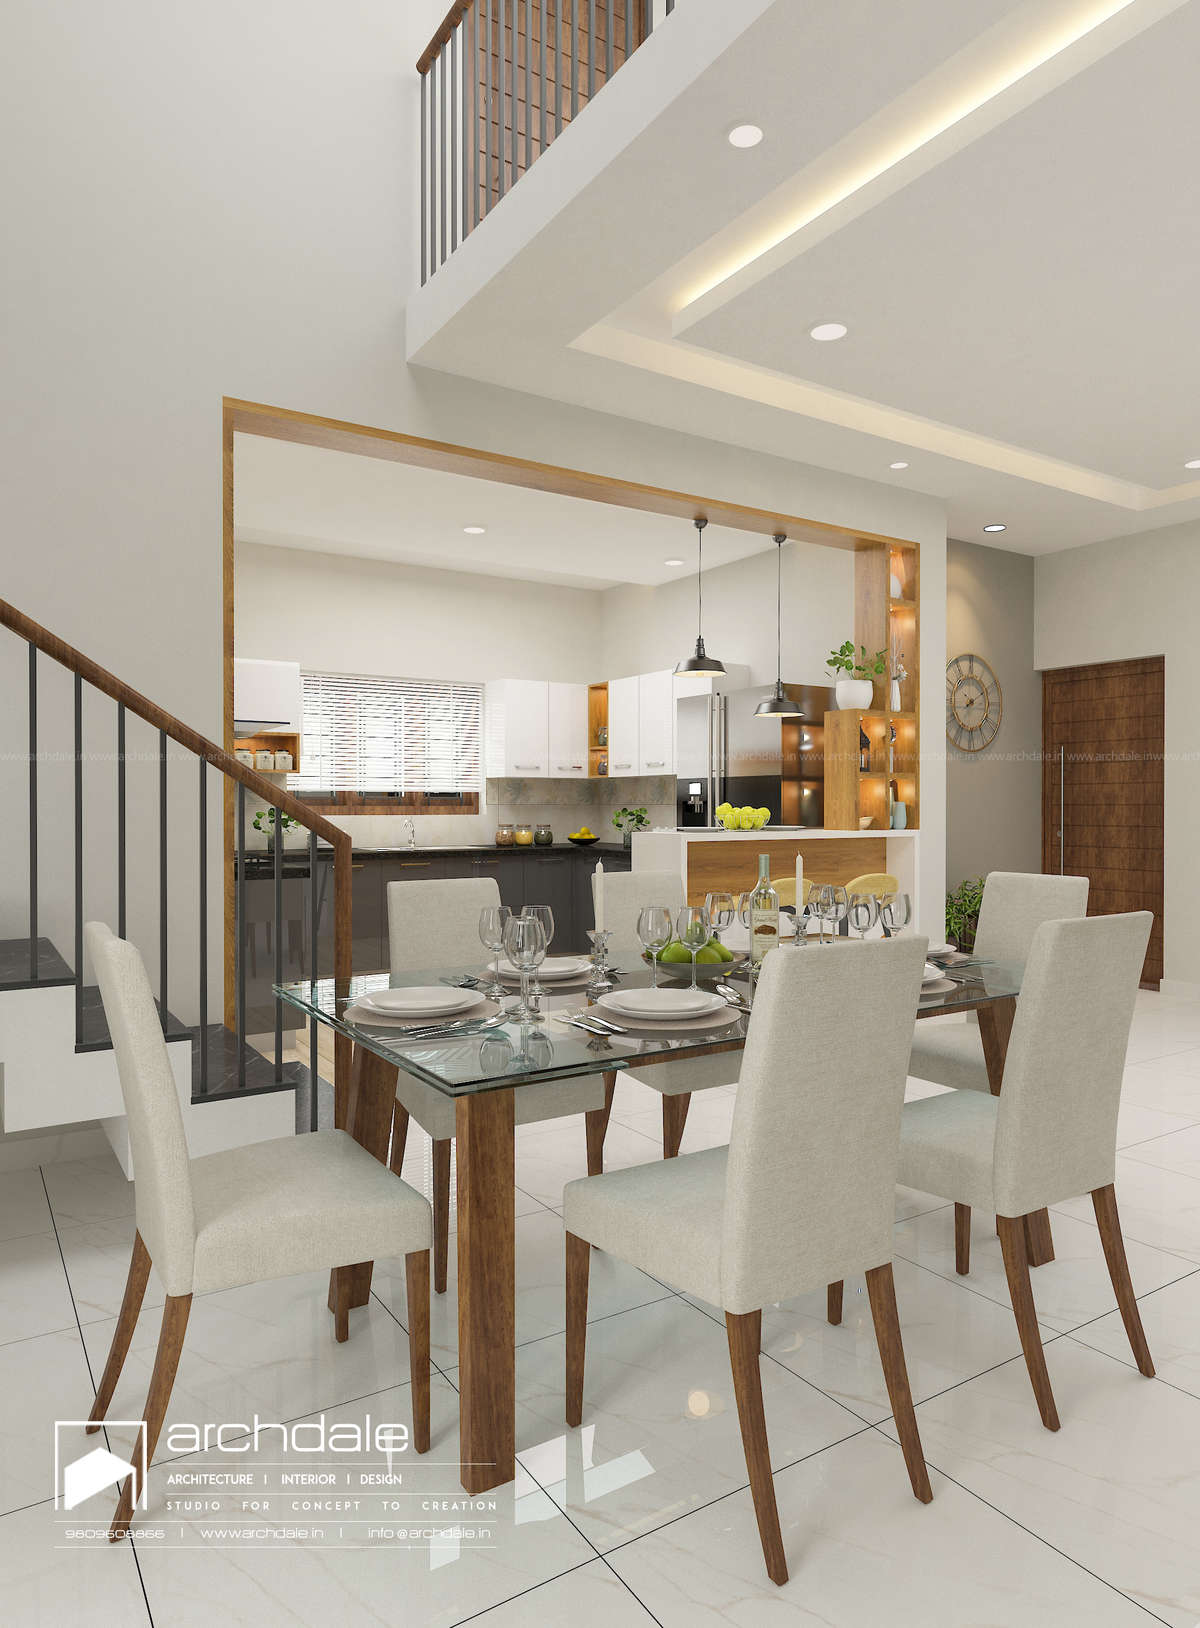 Dining, Kitchen, Home Decor Designs by Architect archdale studio, Kollam | Kolo